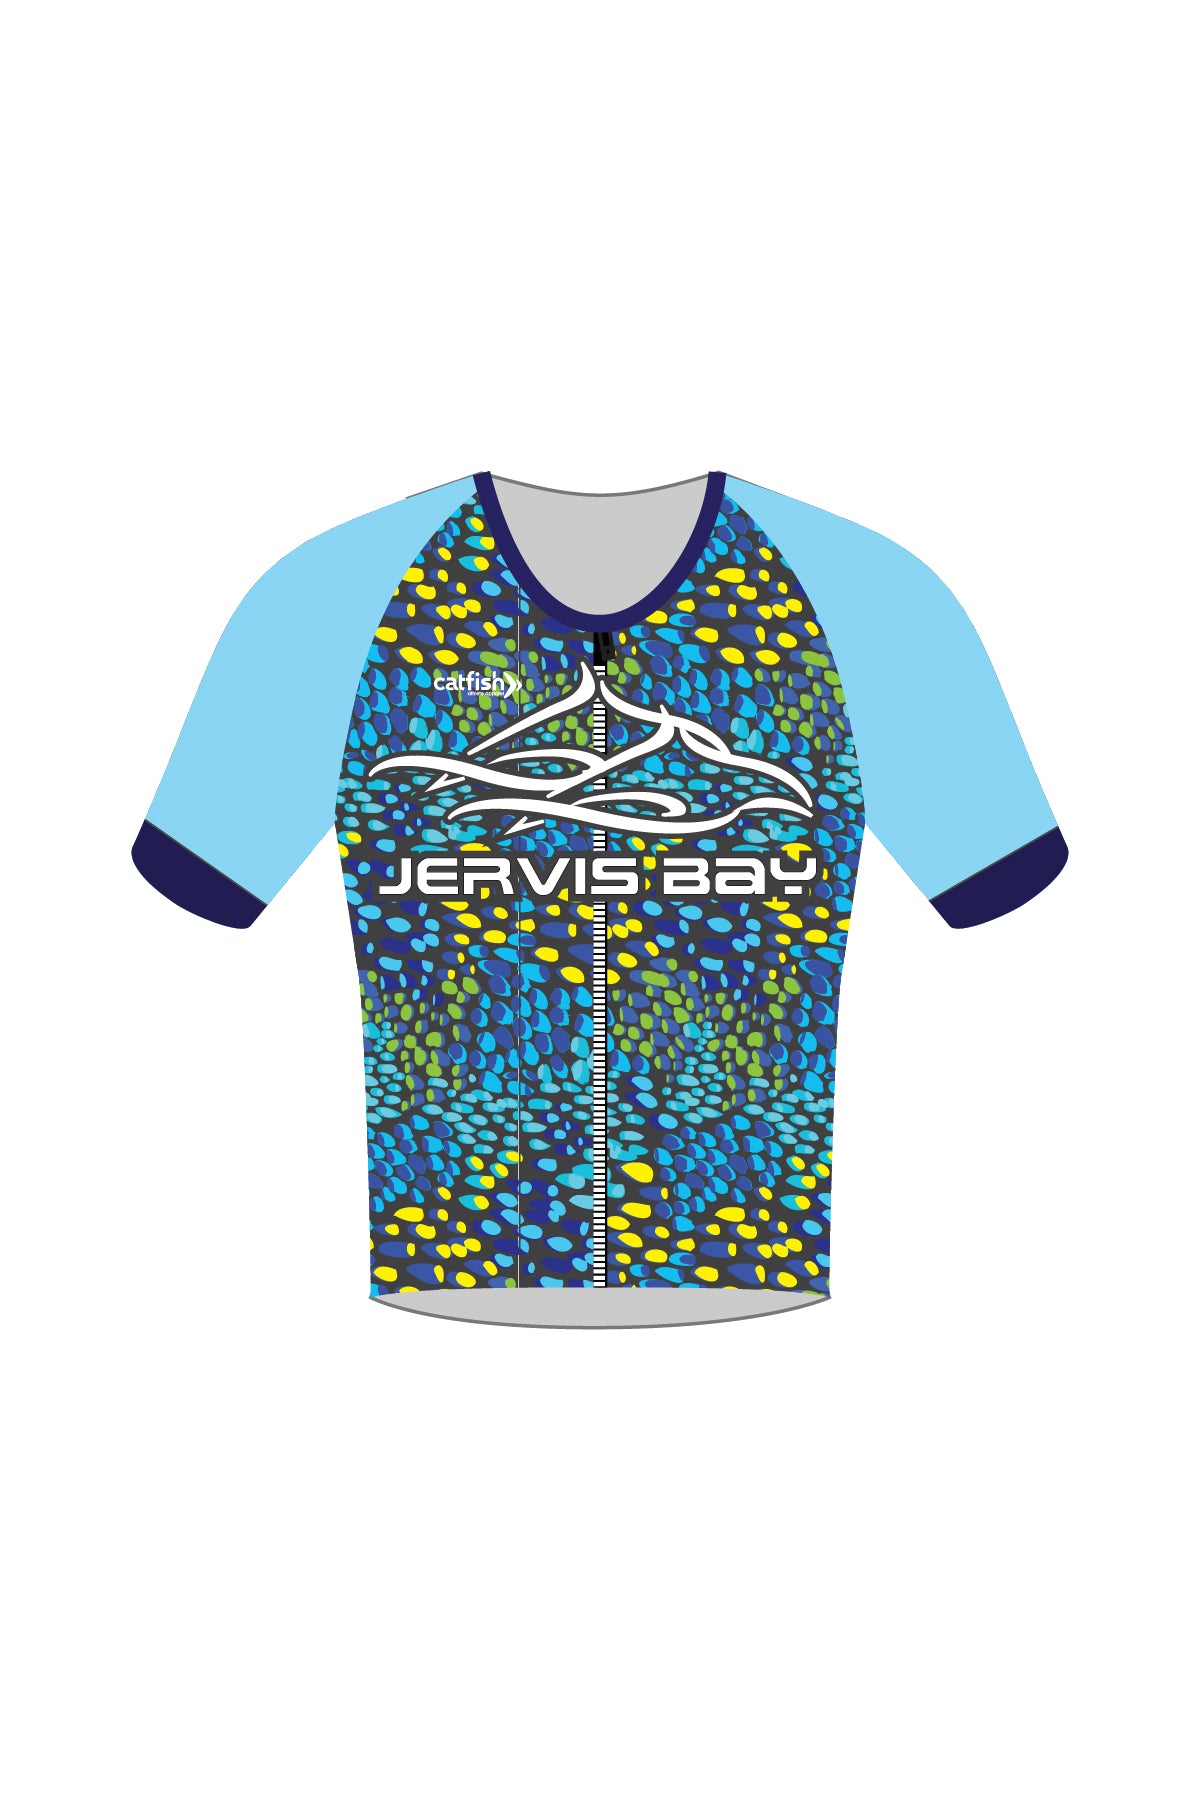 Jervis Bay Tri Club Men's Sleeve Tri Top